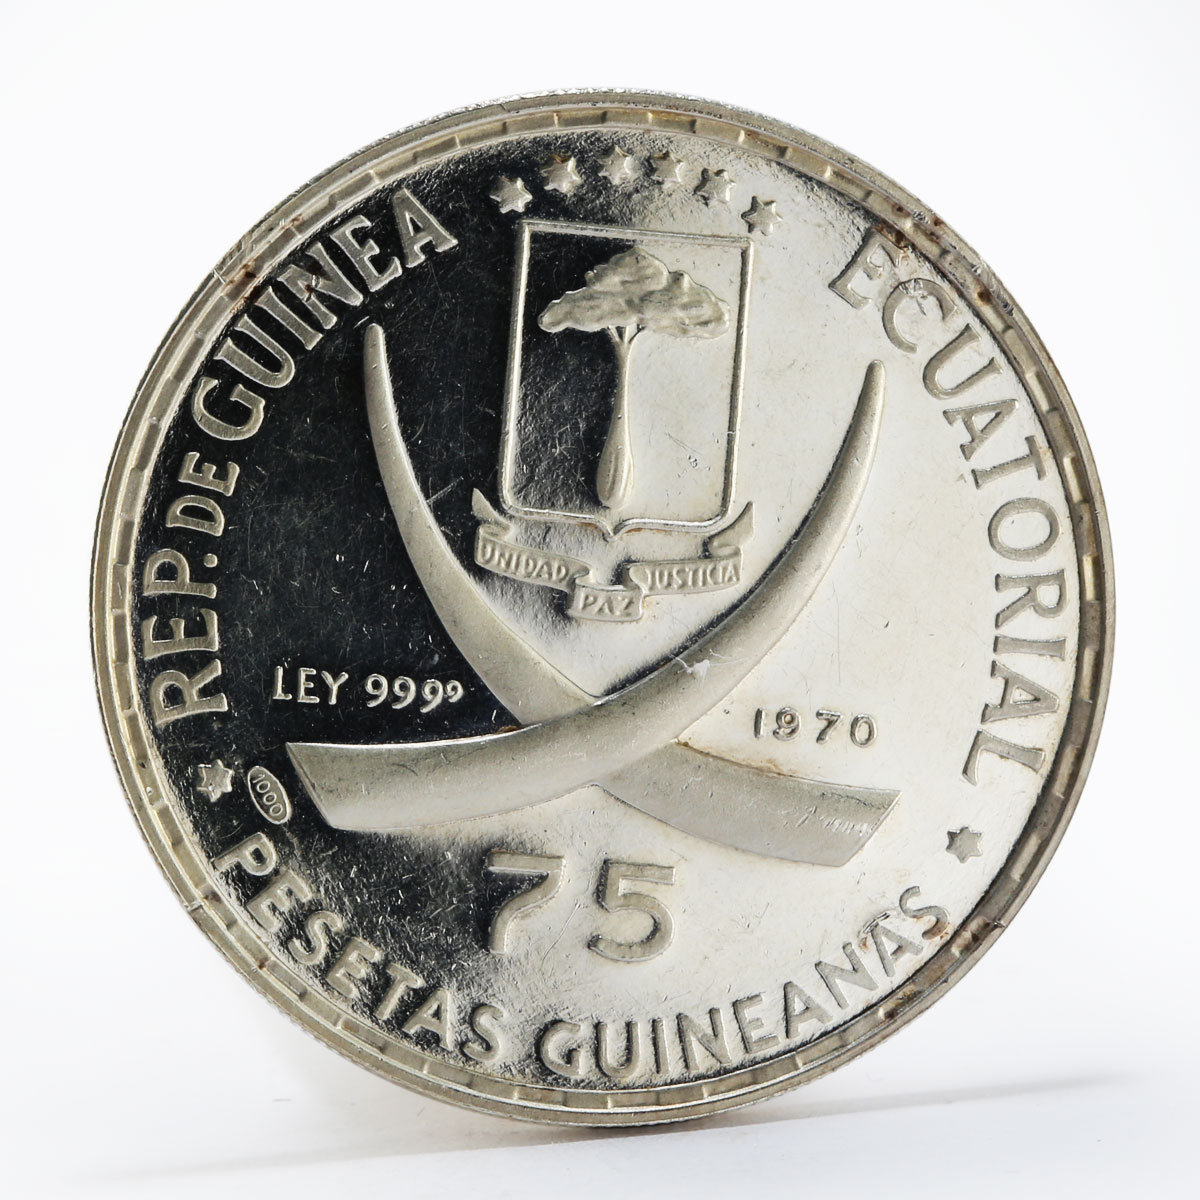 Equatorial Guinea 75 pesetas Vladimir Lenin proof silver coin 1970